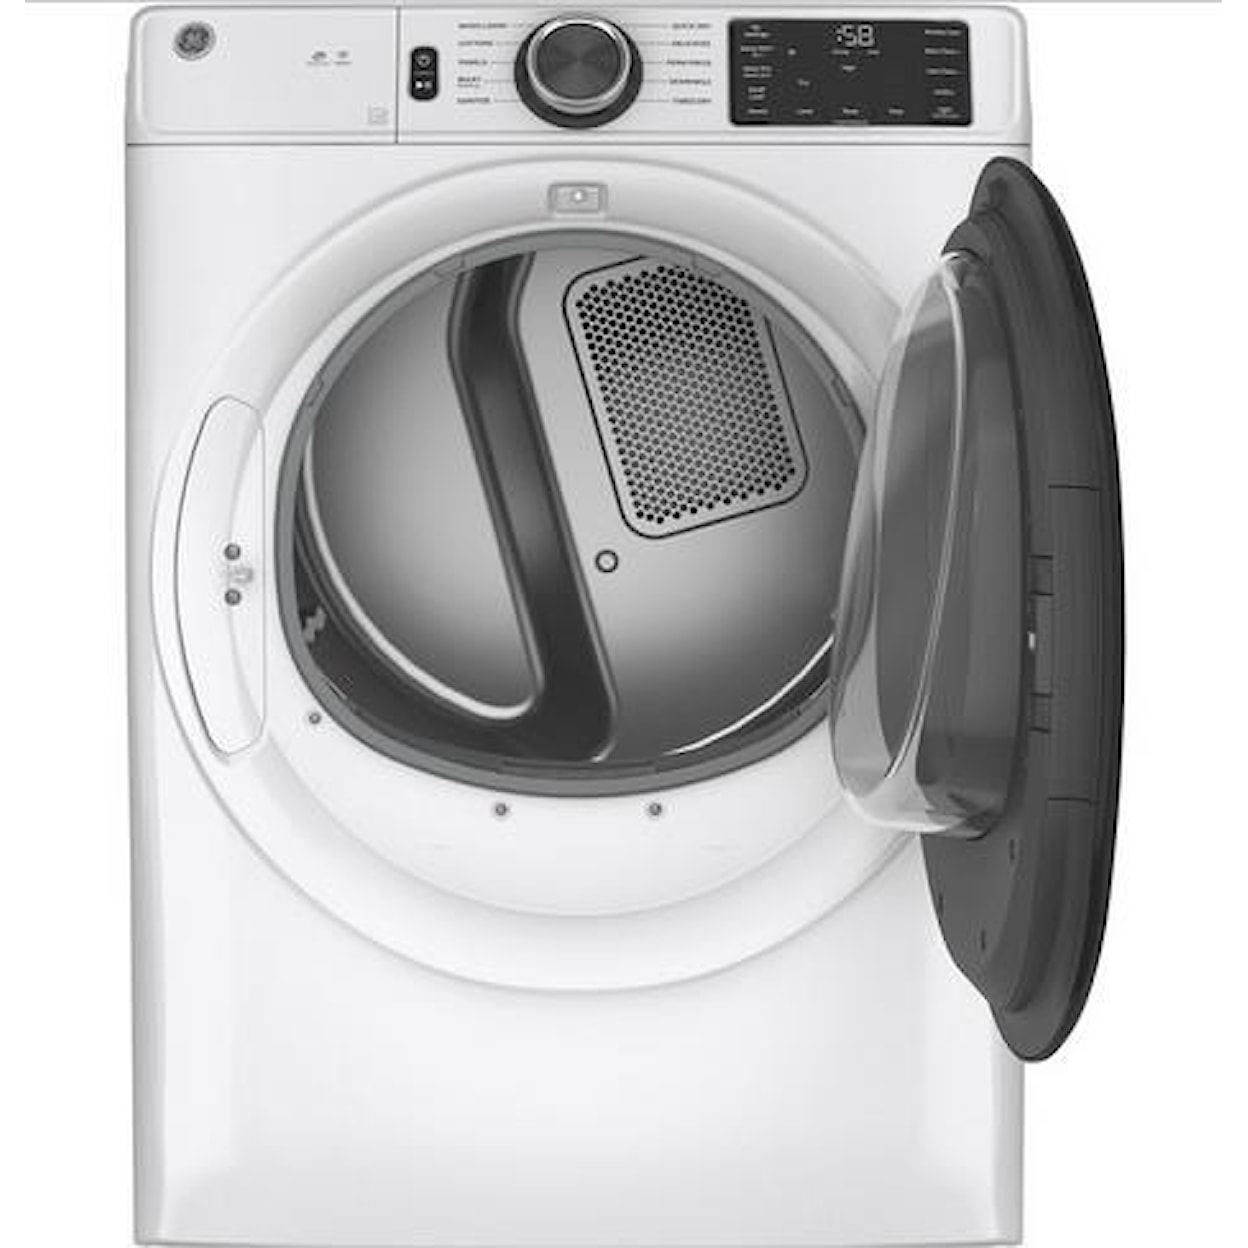 GE Appliances GE Electric Dryers 7.8 cu. ft. Capacity Smart Front Load Dryer